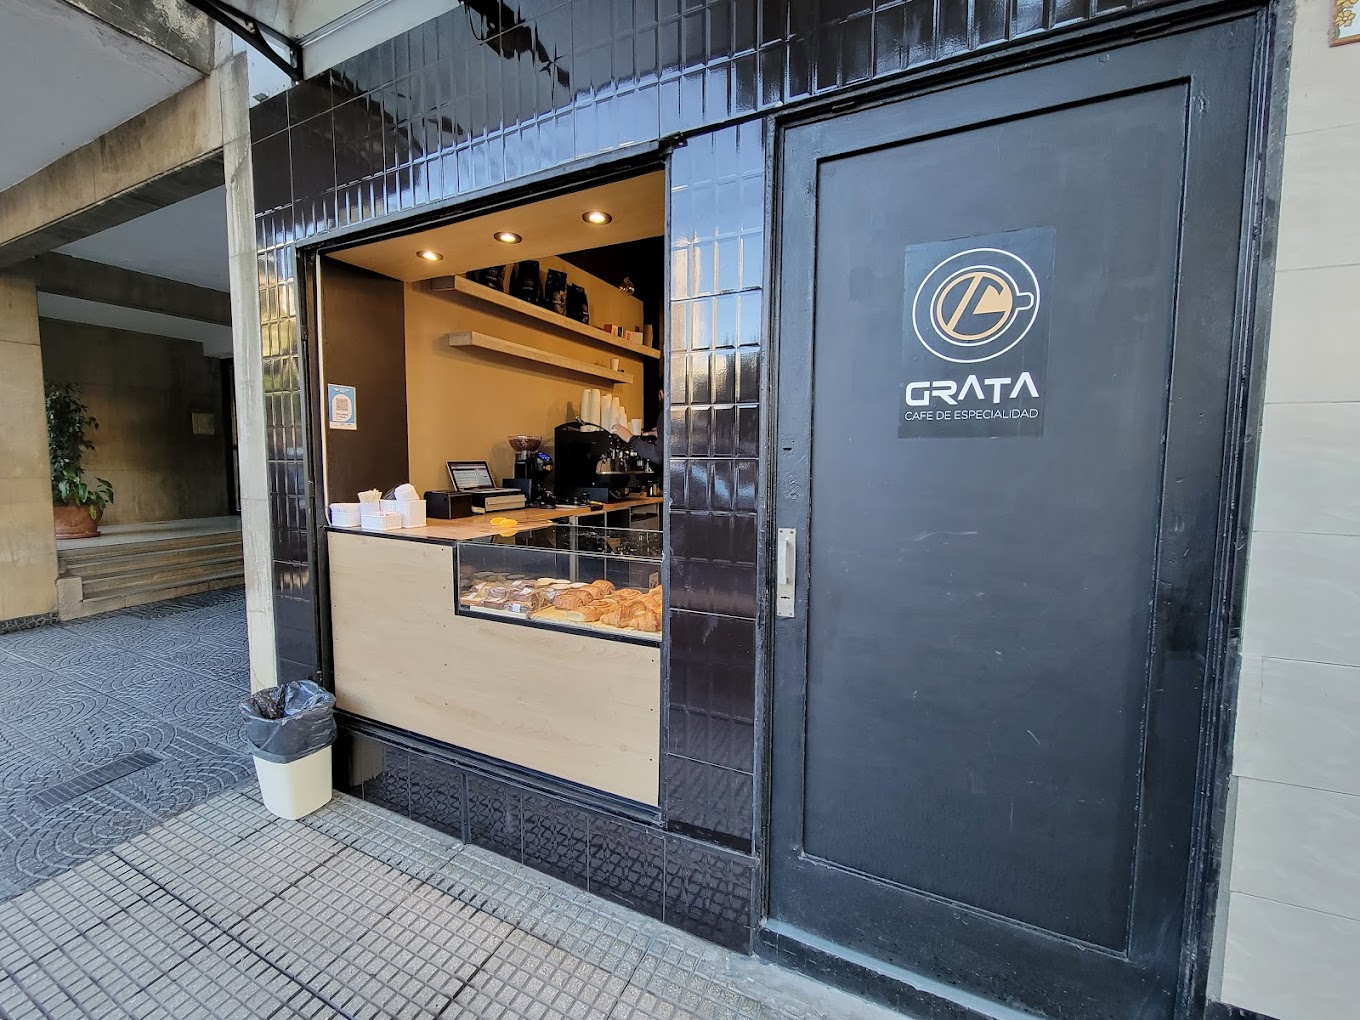 Grata Café